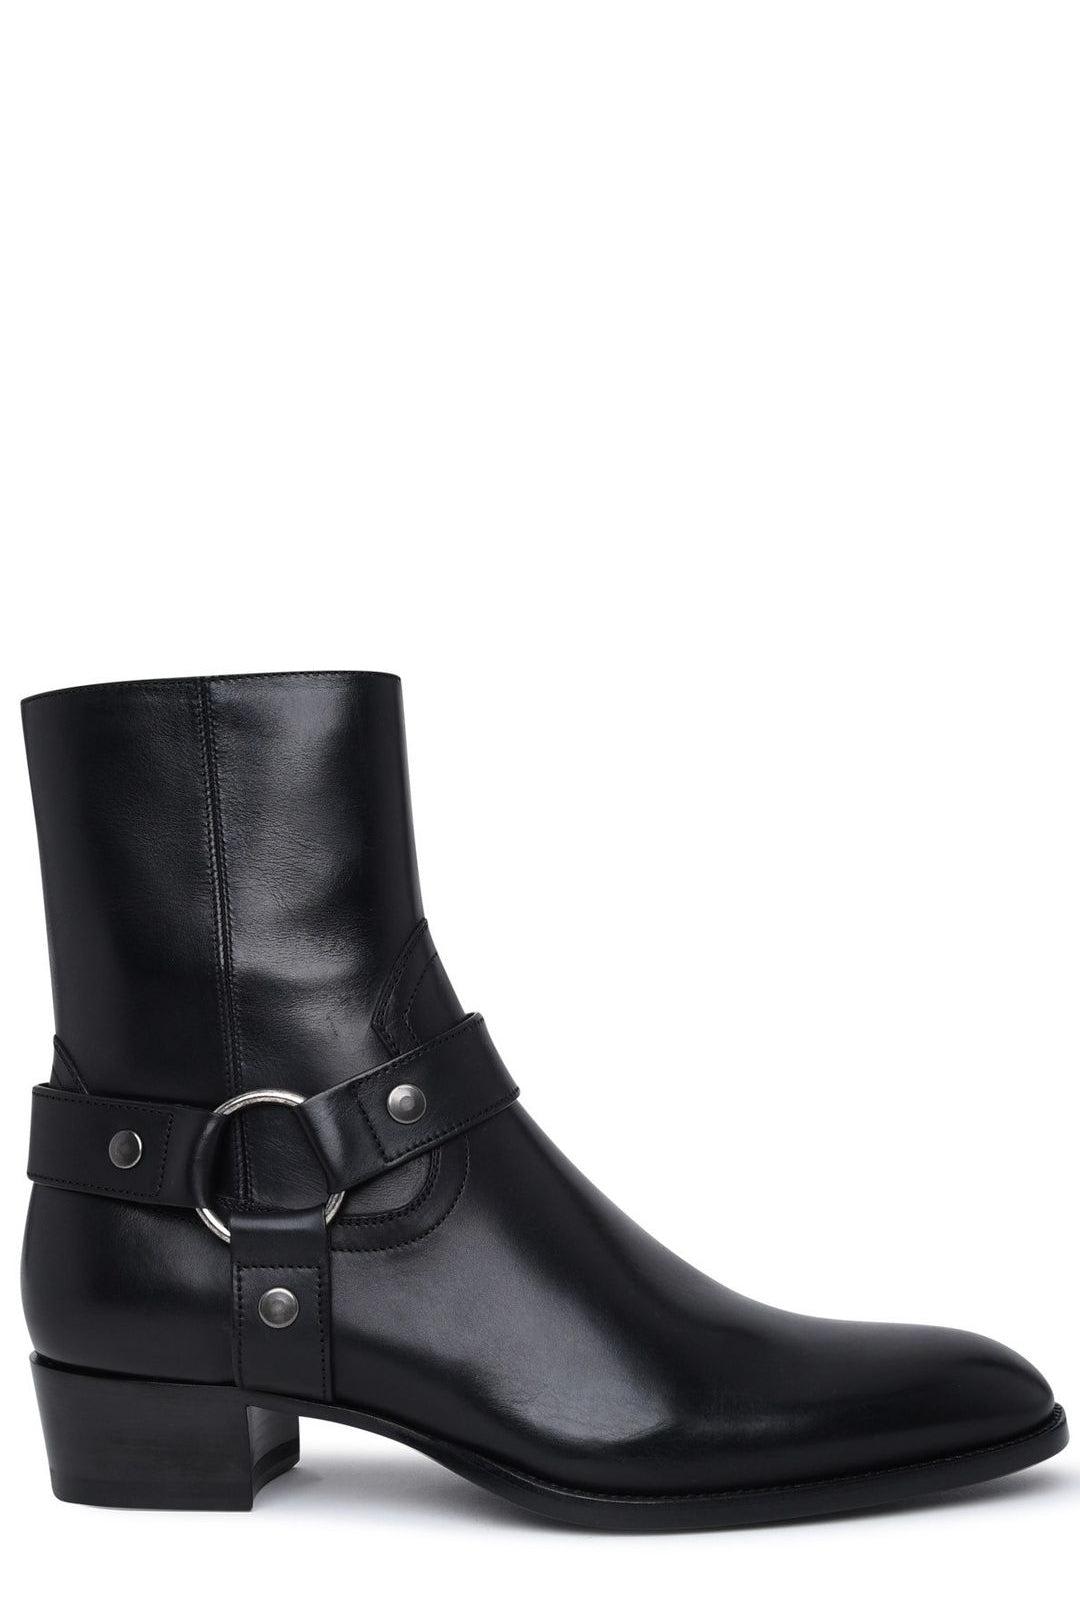 Saint Laurent Wyatt Almond Toe Harness Boots